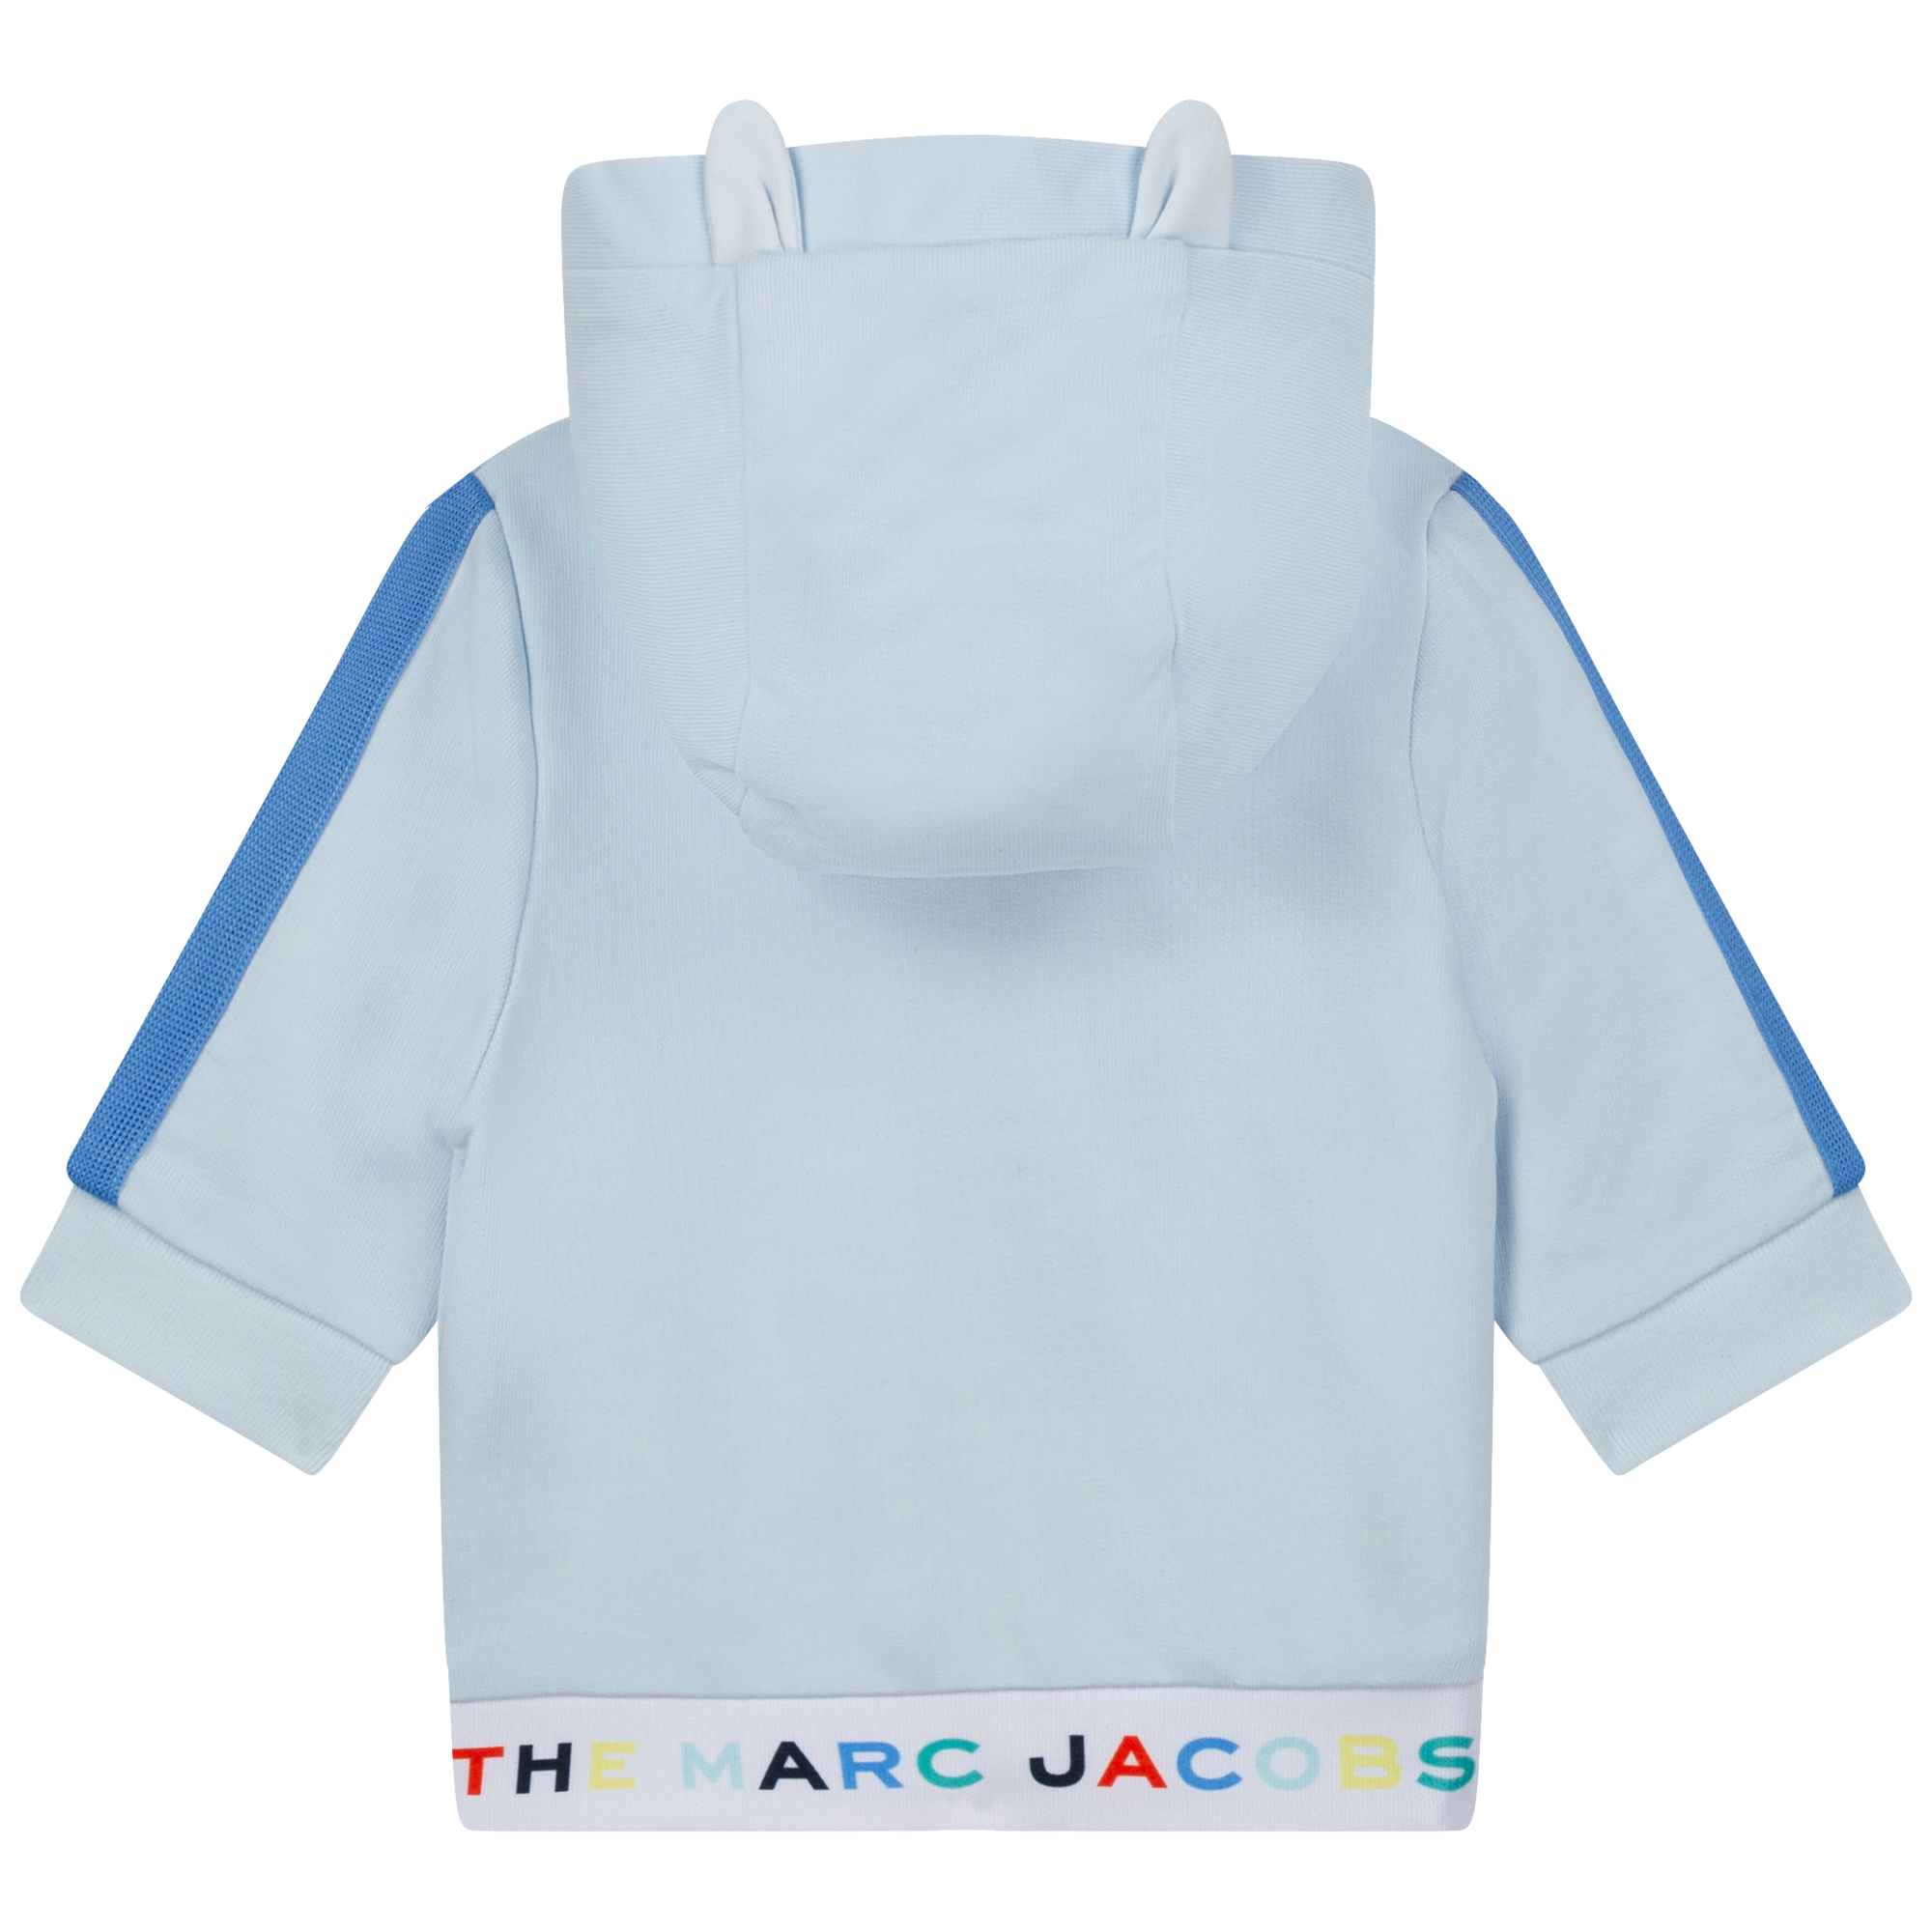 Conjunto chándal y camiseta MARC JACOBS para UNISEXO